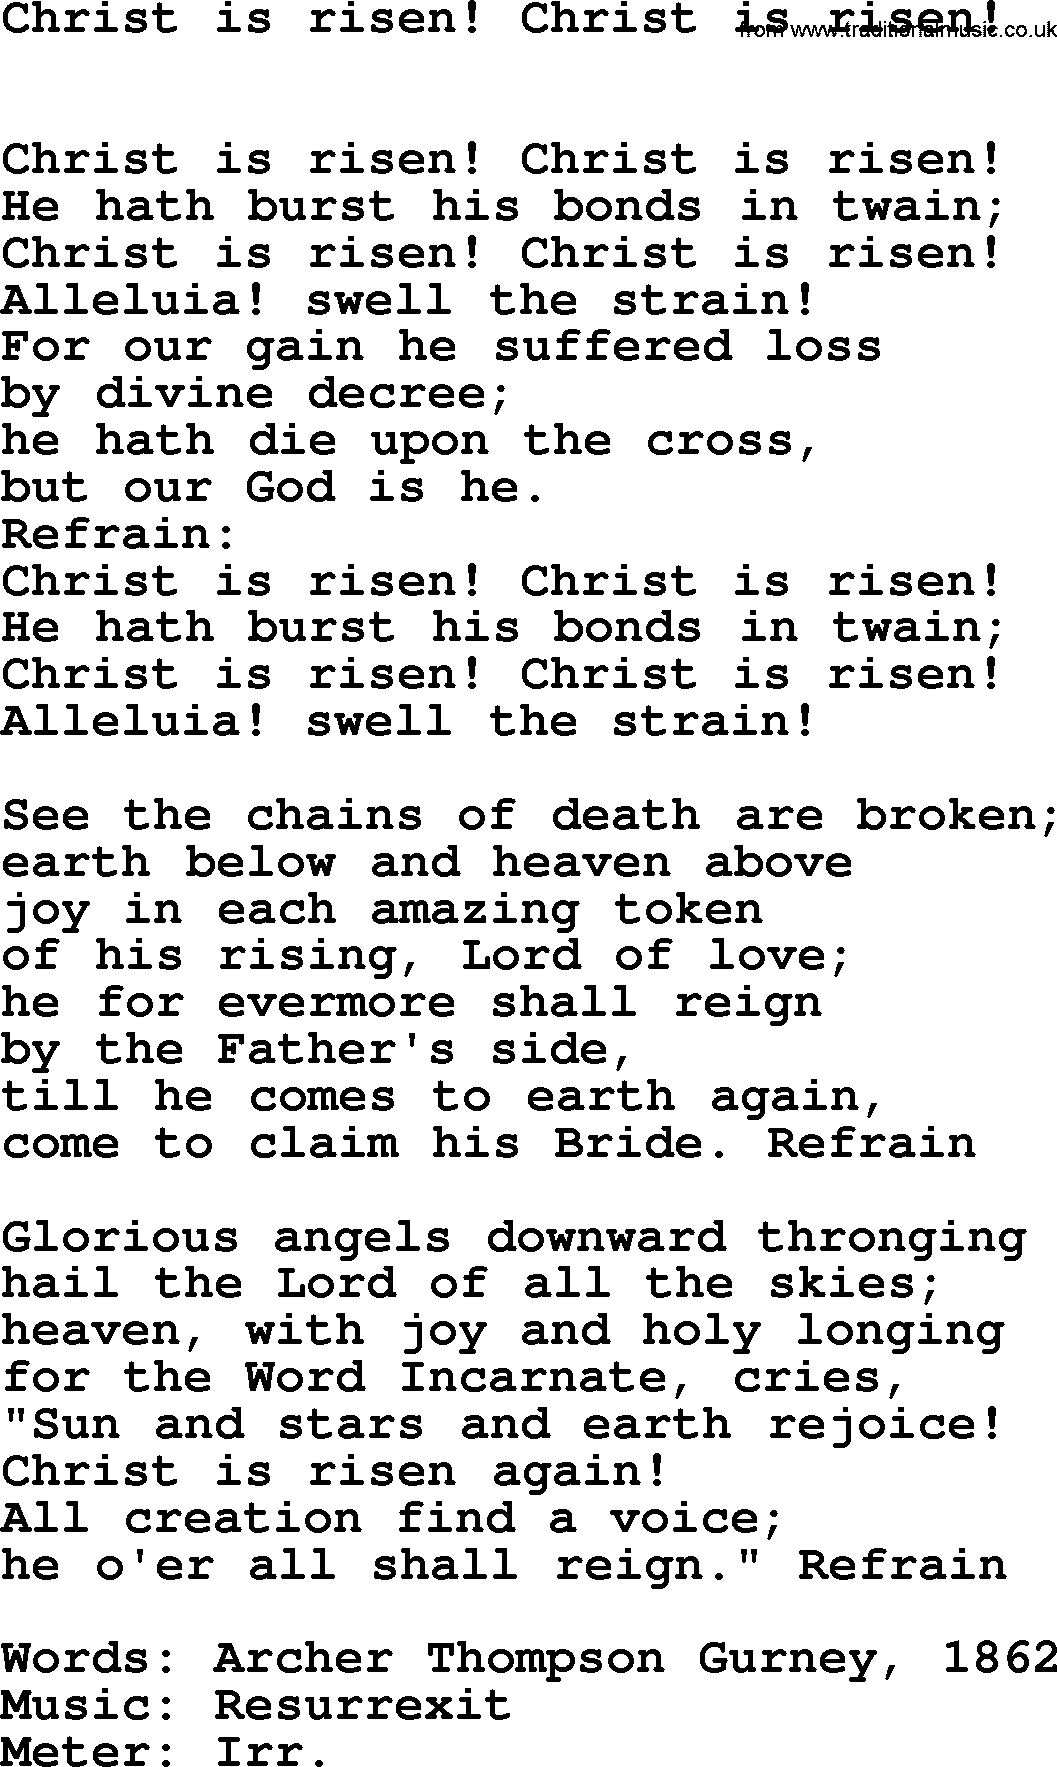 Book of Common Praise Hymn: Christ Is Risen! Christ Is Risen!.txt lyrics with midi music